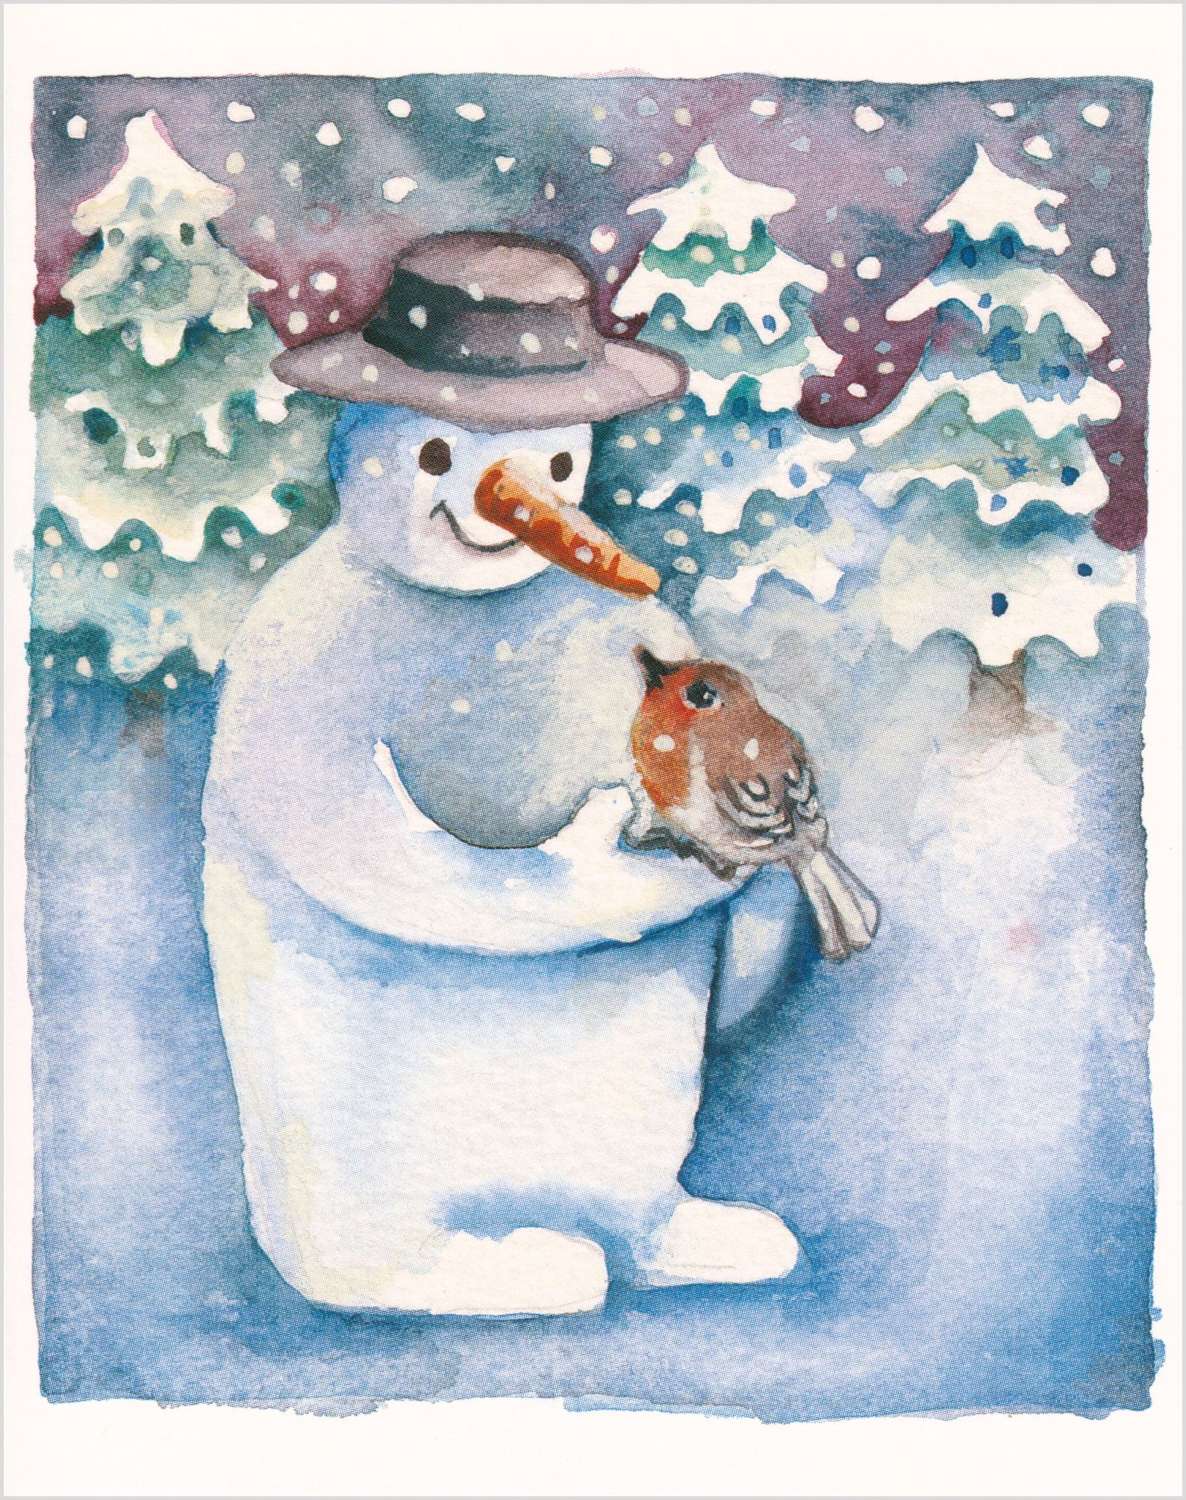 The snowman & Robin